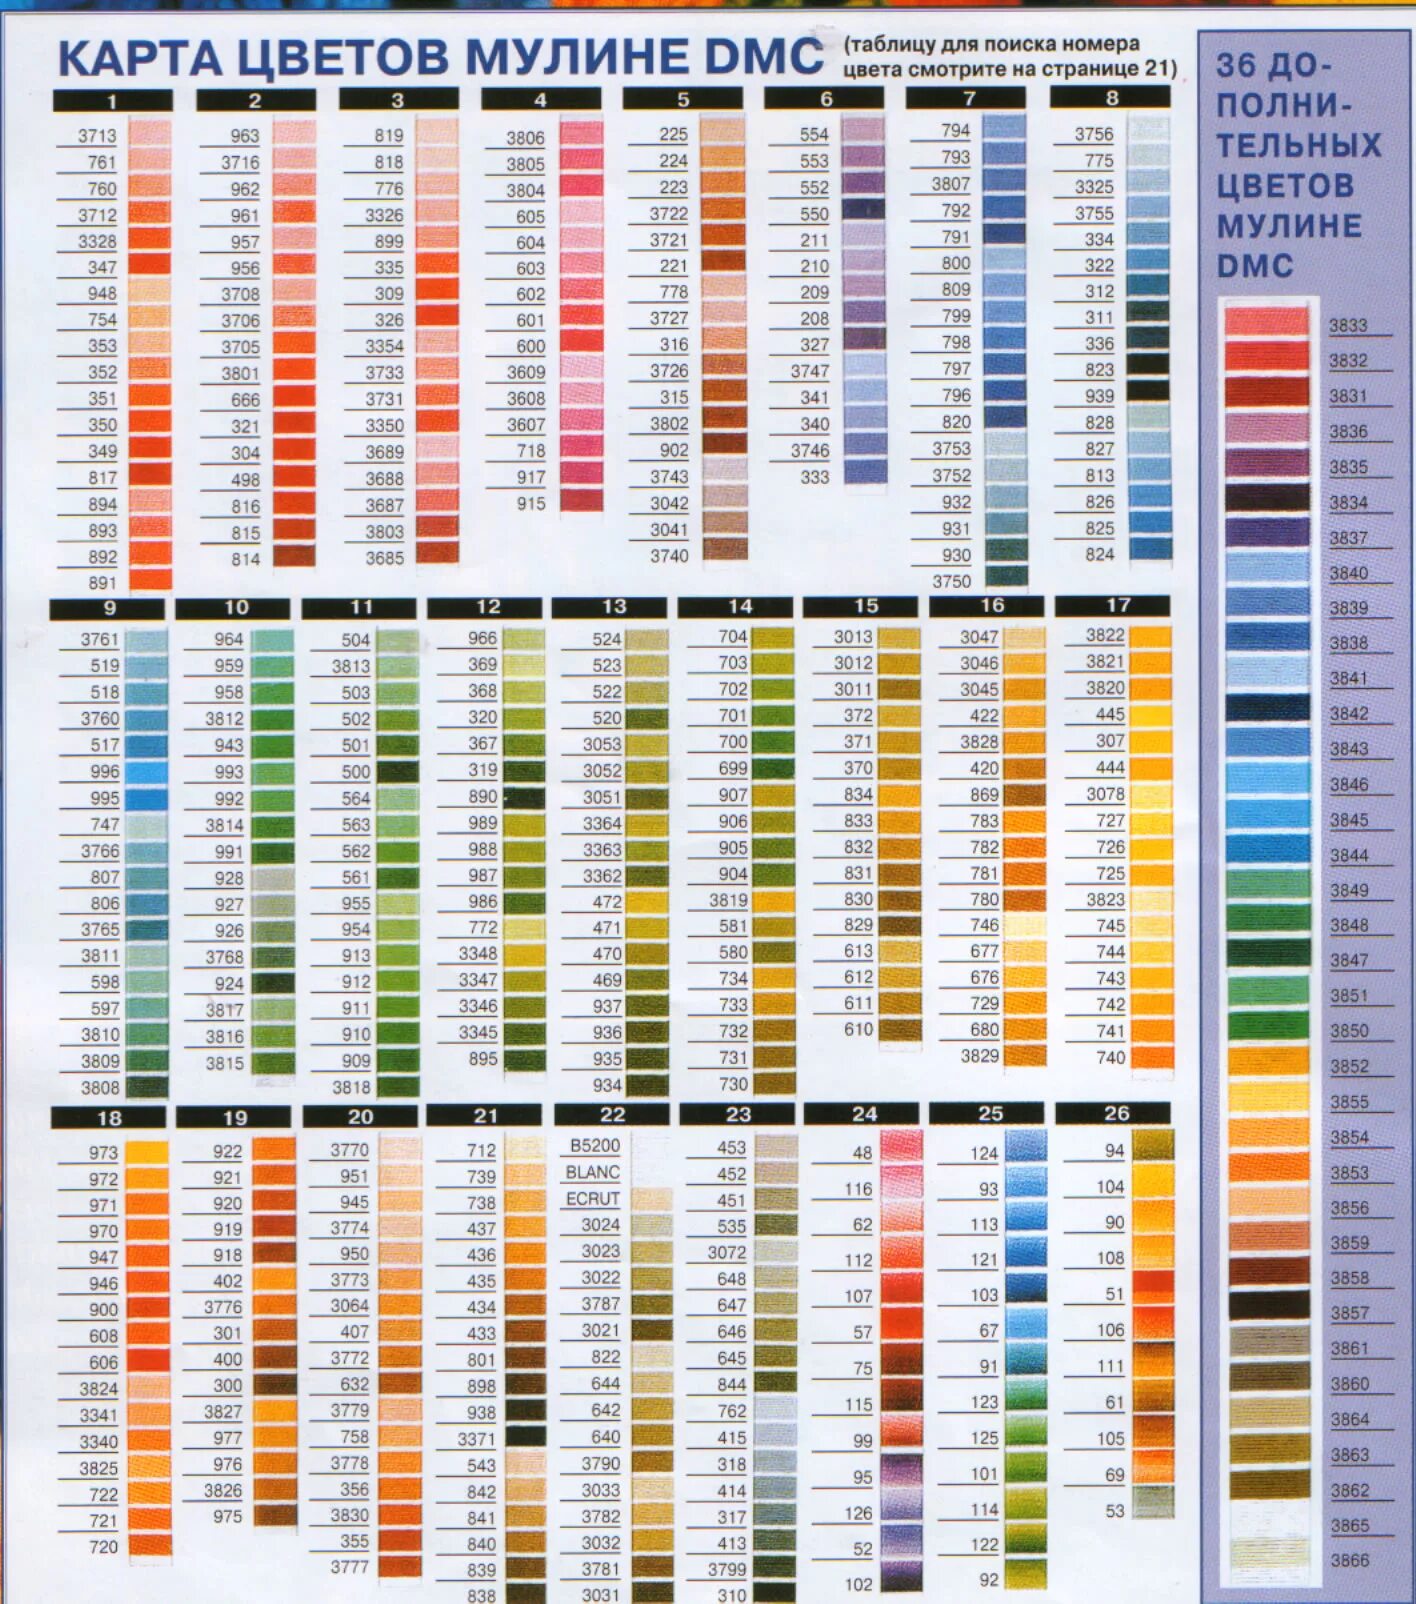 Таблица цветов ниток мулине СХС. Цветовая палитра мулине ДМС. Нитки мулине ДМС таблица. Нитки мулине DMC таблица цветов. Таблица dmc